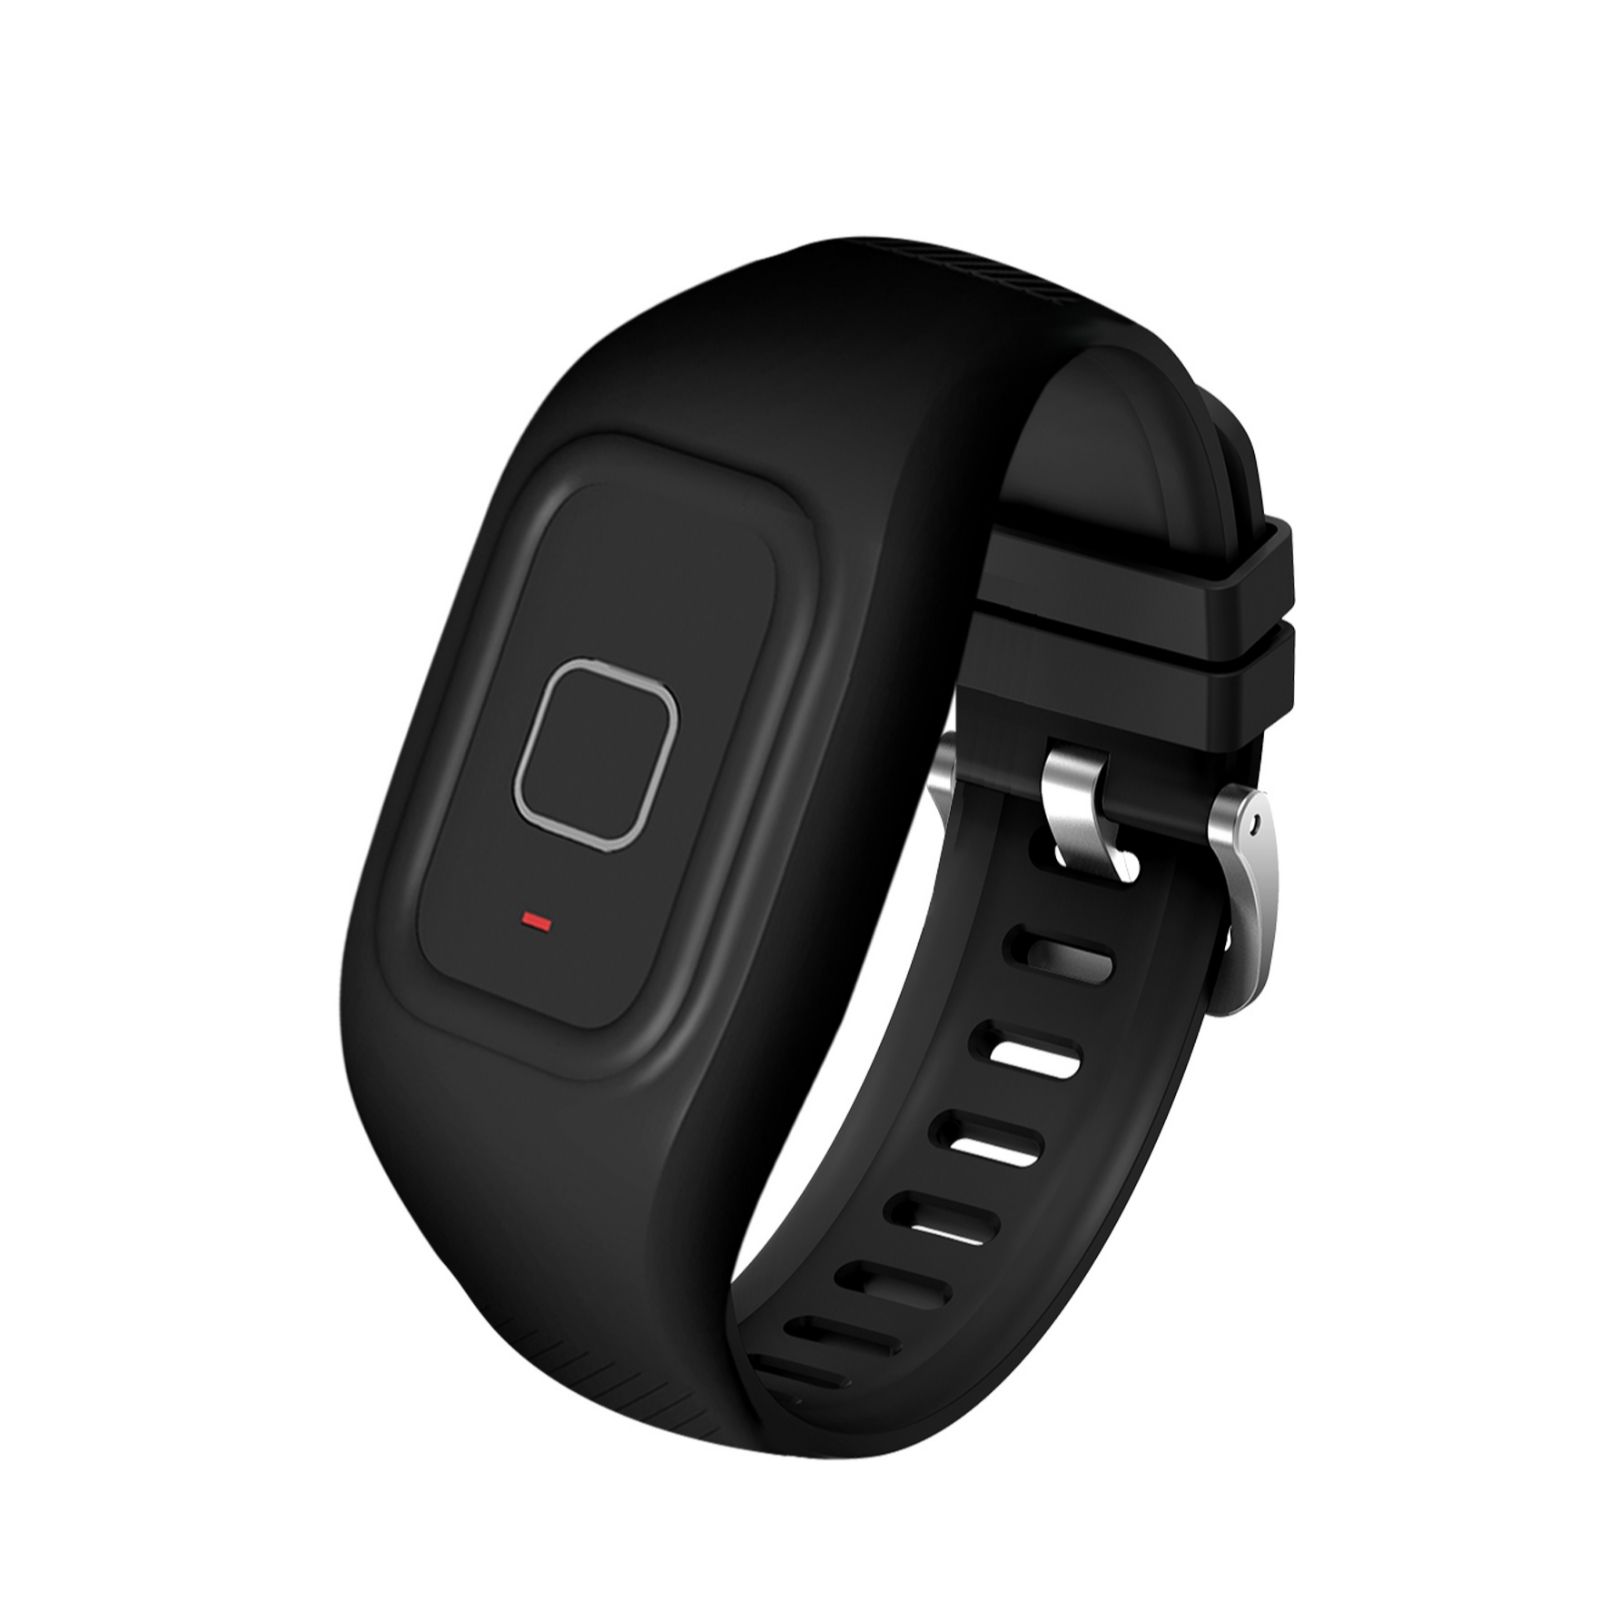 Maxcom Comfort Phone MM735 2G with SOS wristband - QVC UK